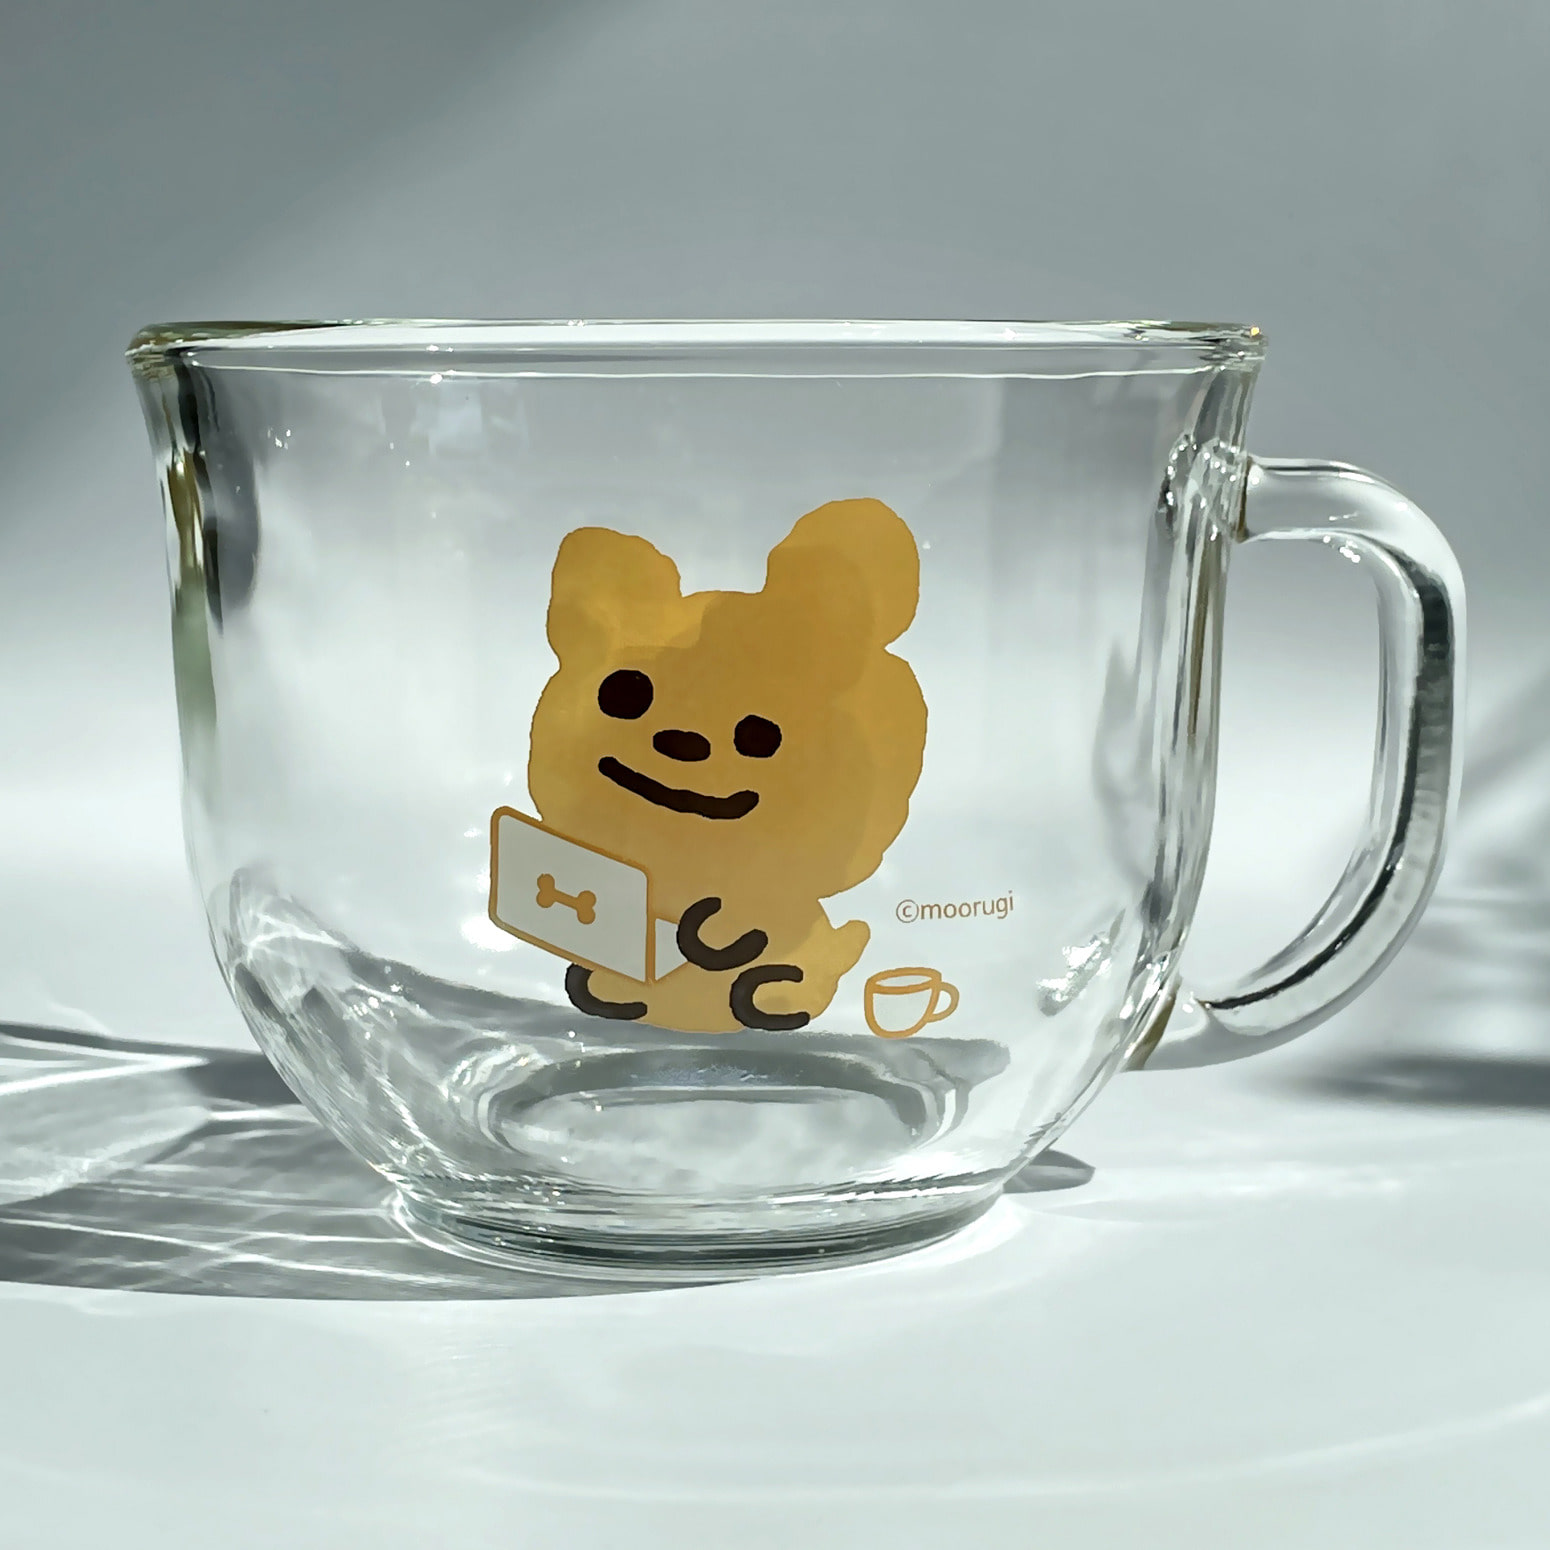 Cereal cup, mug